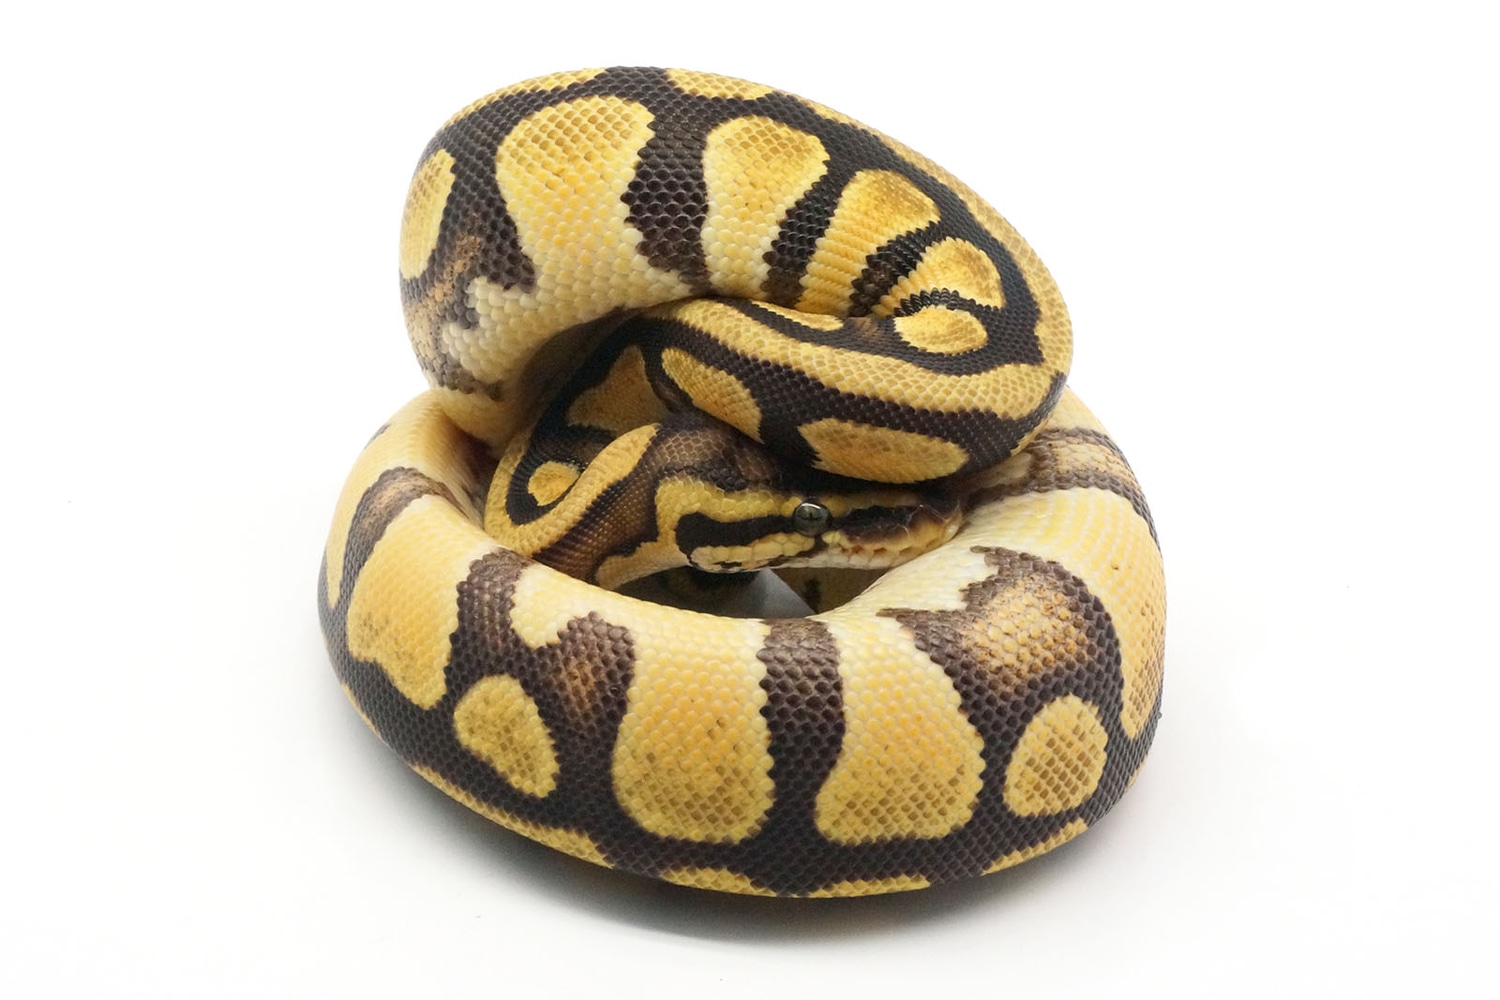 Pastel EMG Enchi Ball Python by New England Reptile Distributors